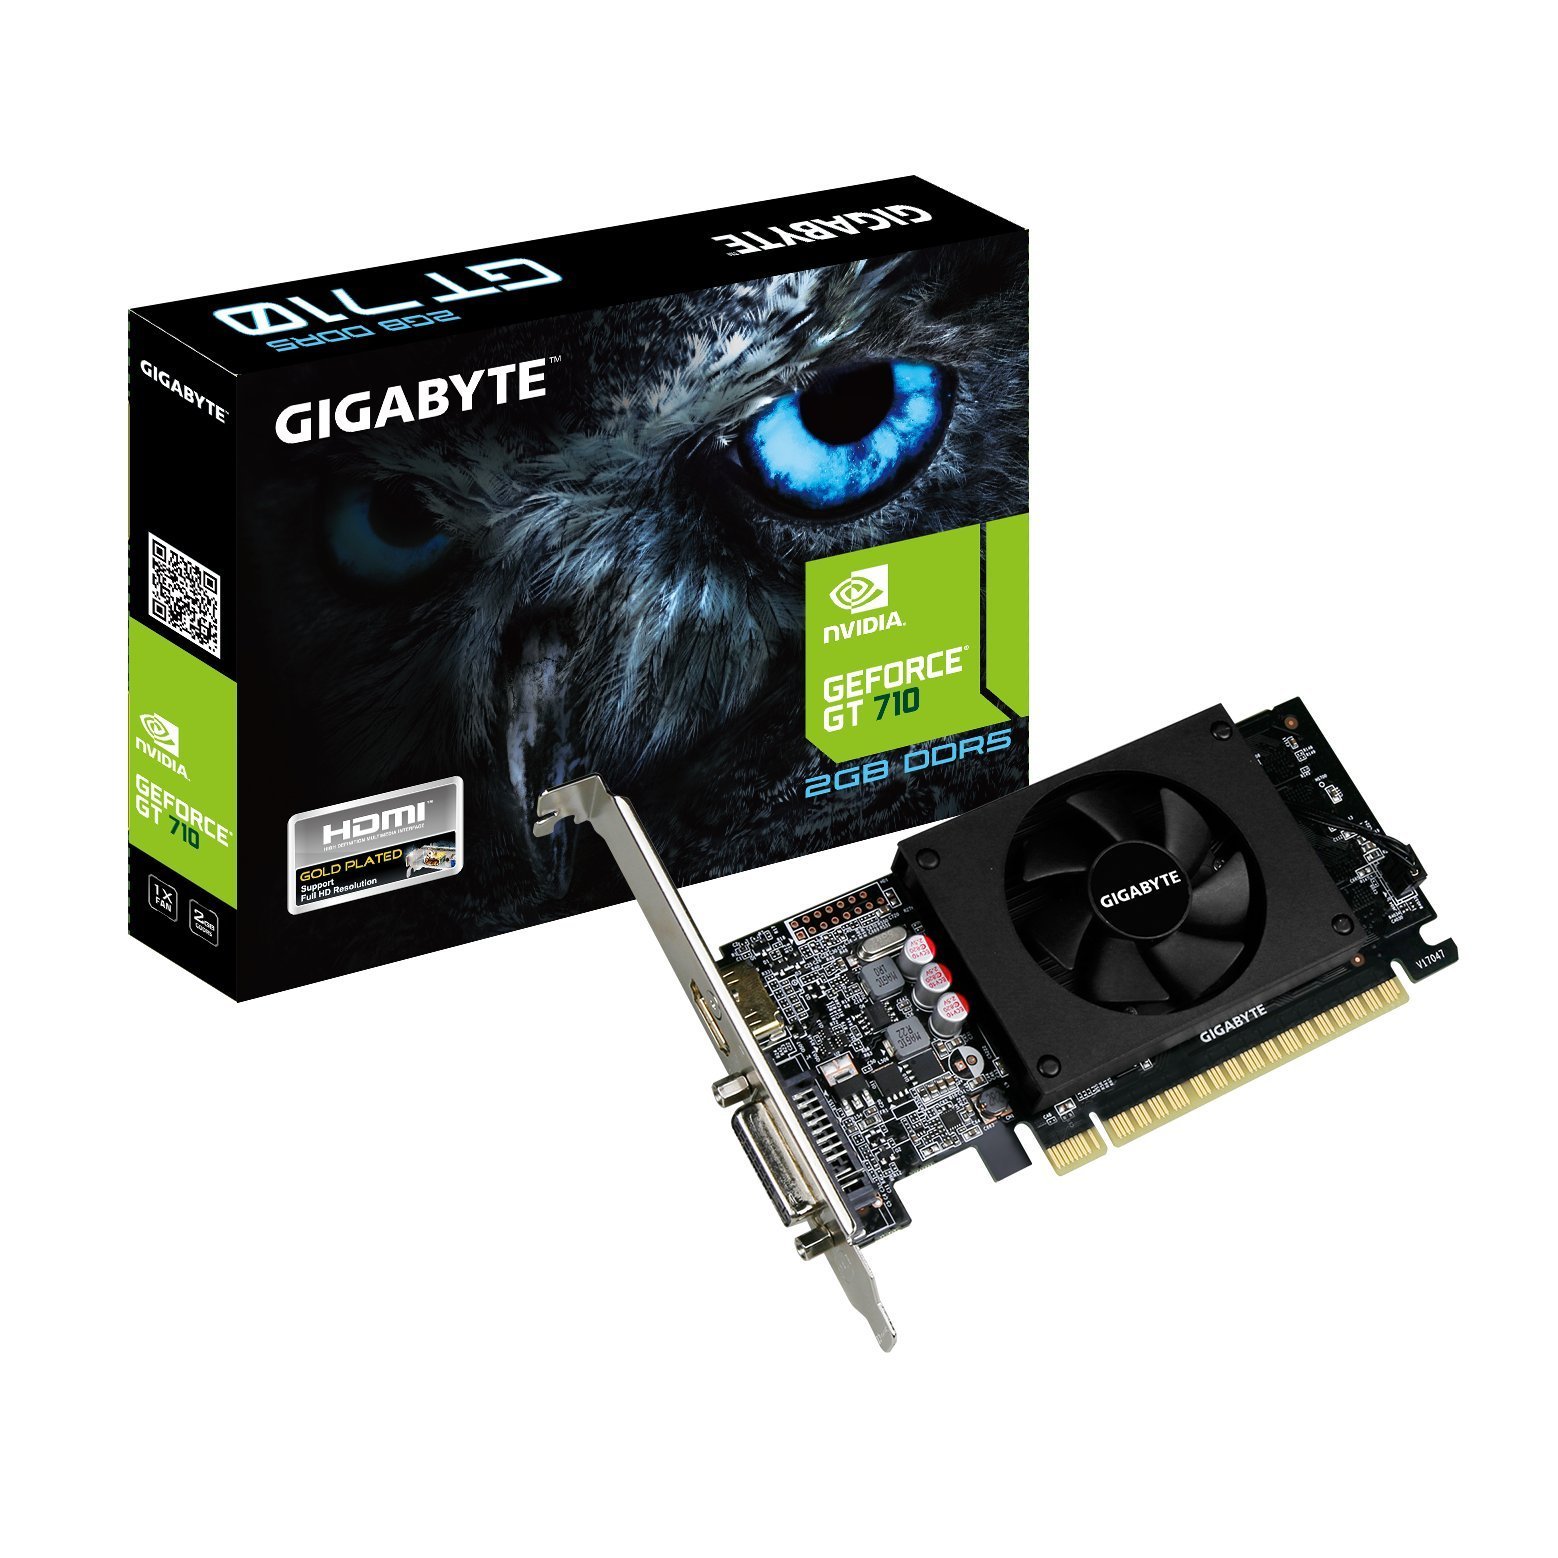 Gigabyte GeForce GT 710 2GB グラフィックカードとPCI Express 2.0 X8 バスインターフェースをサポートグ